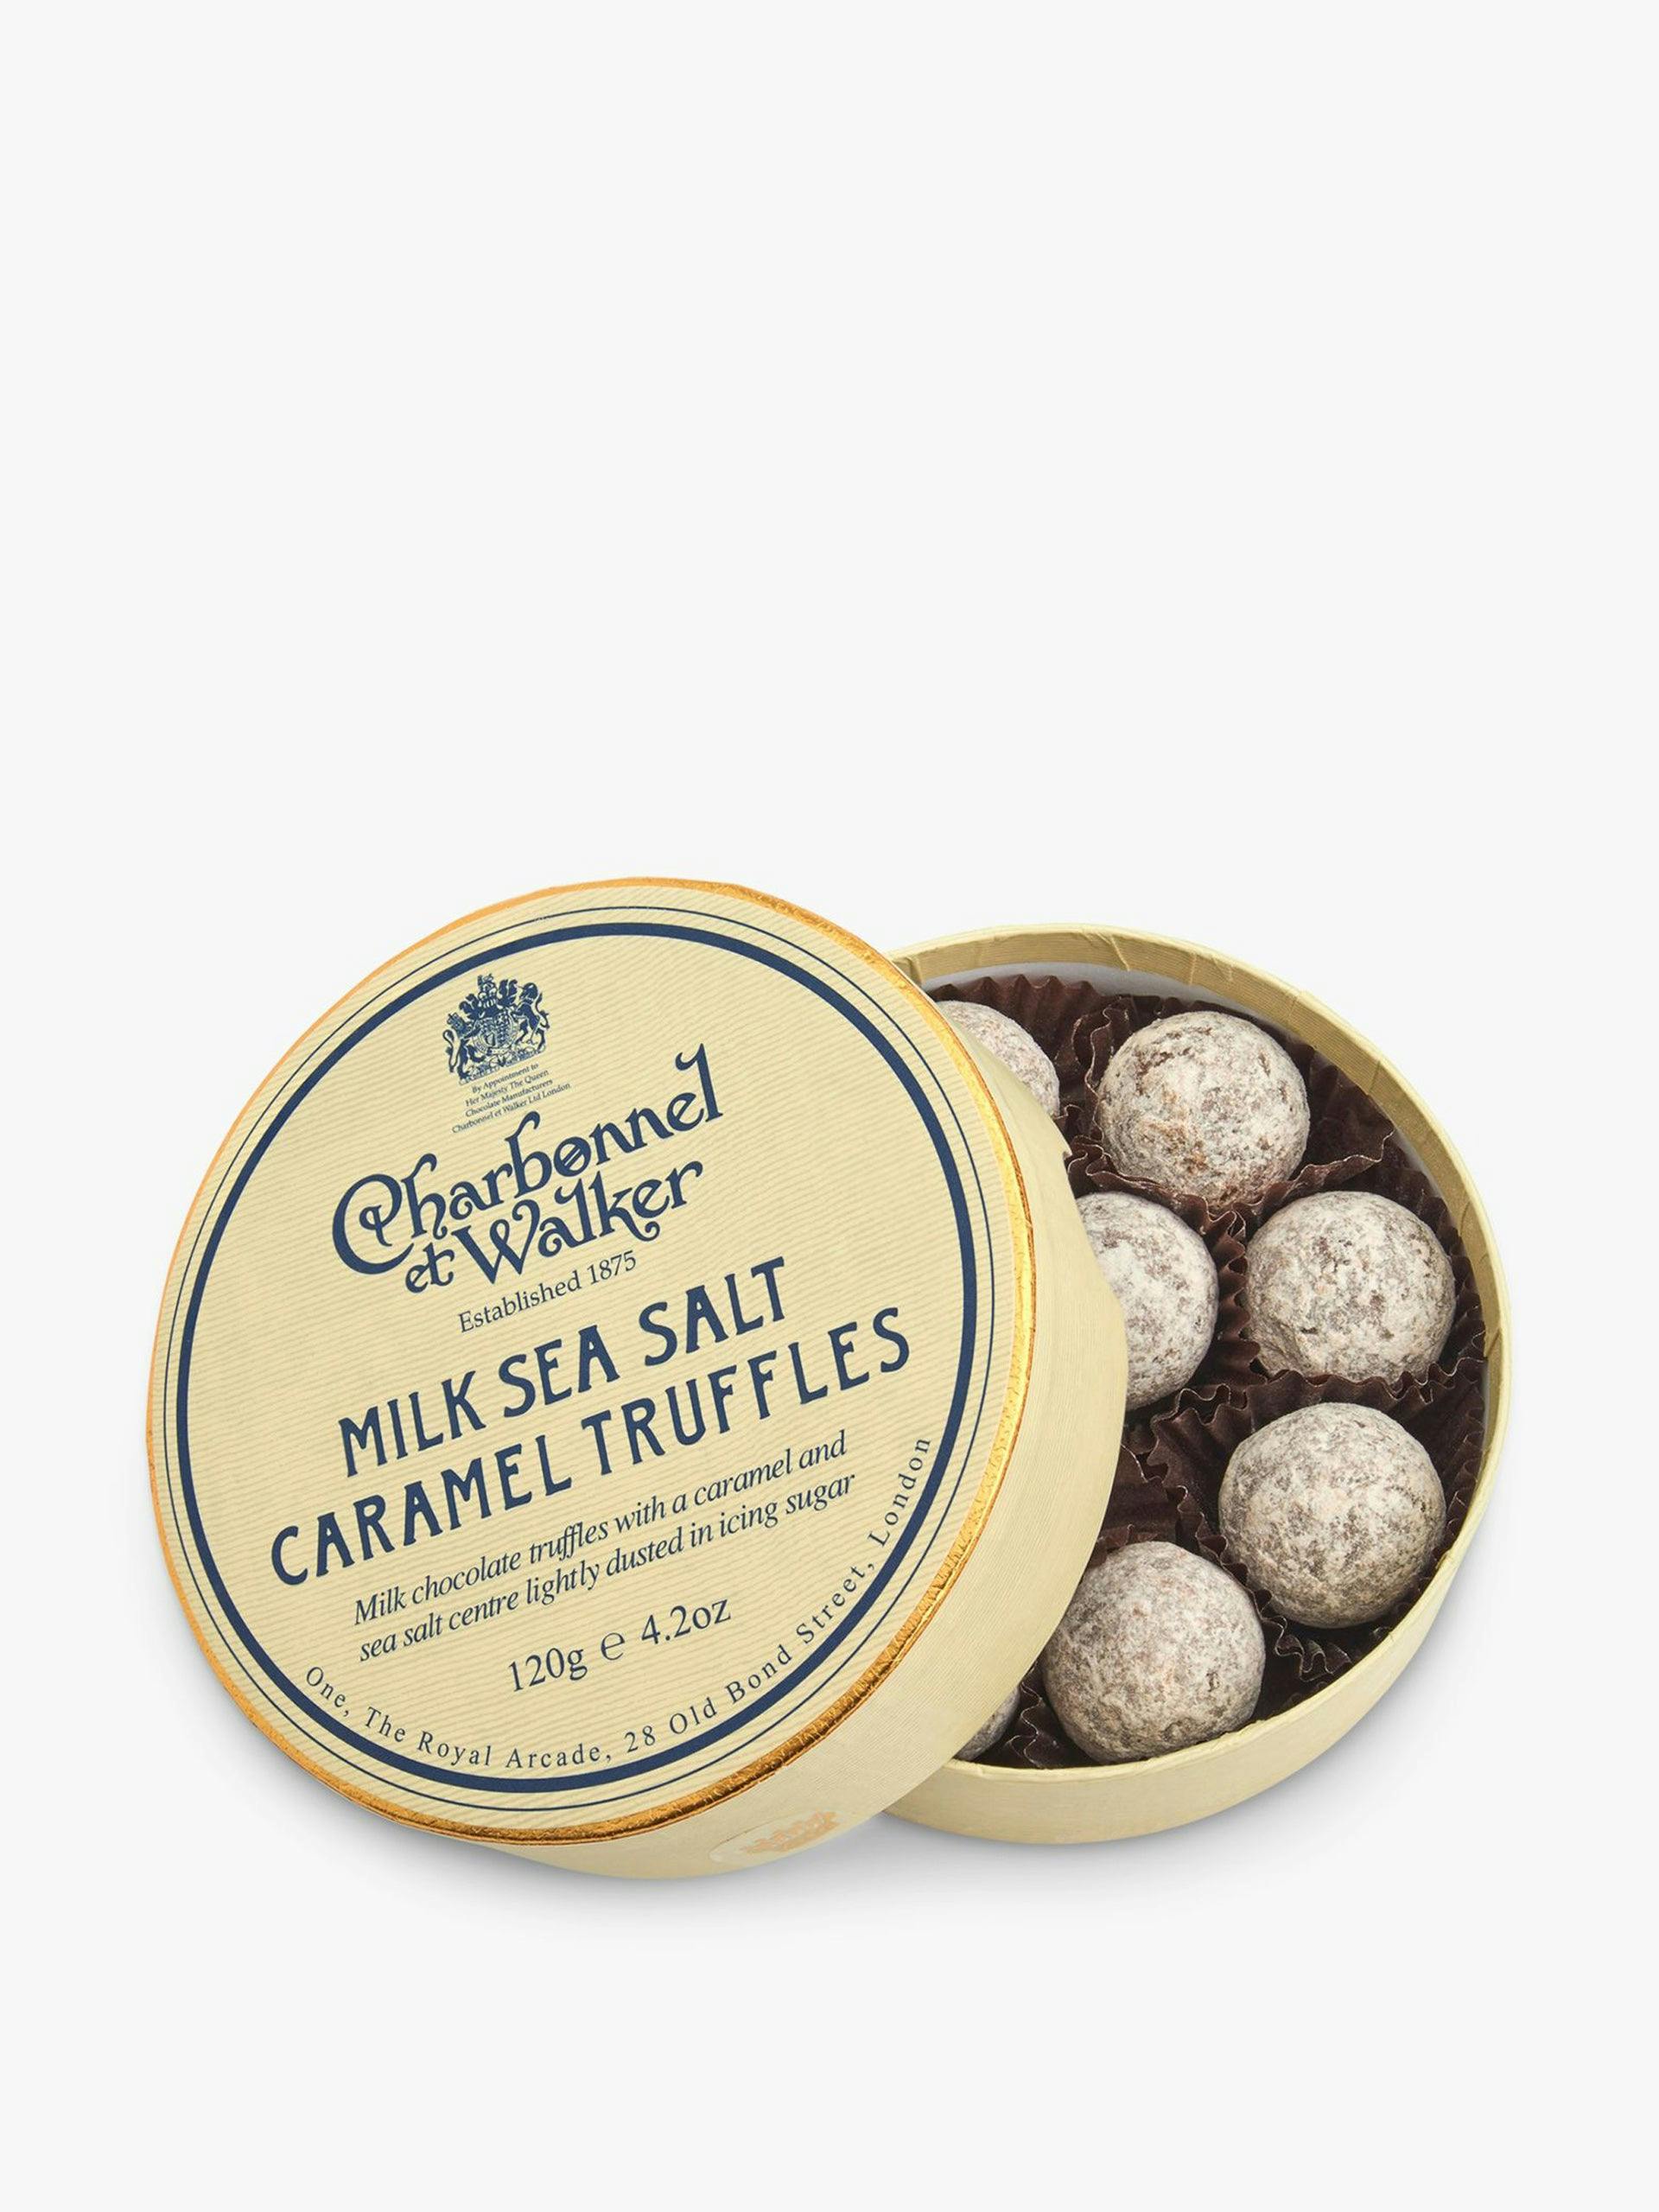 Milk sea salt caramel truffles